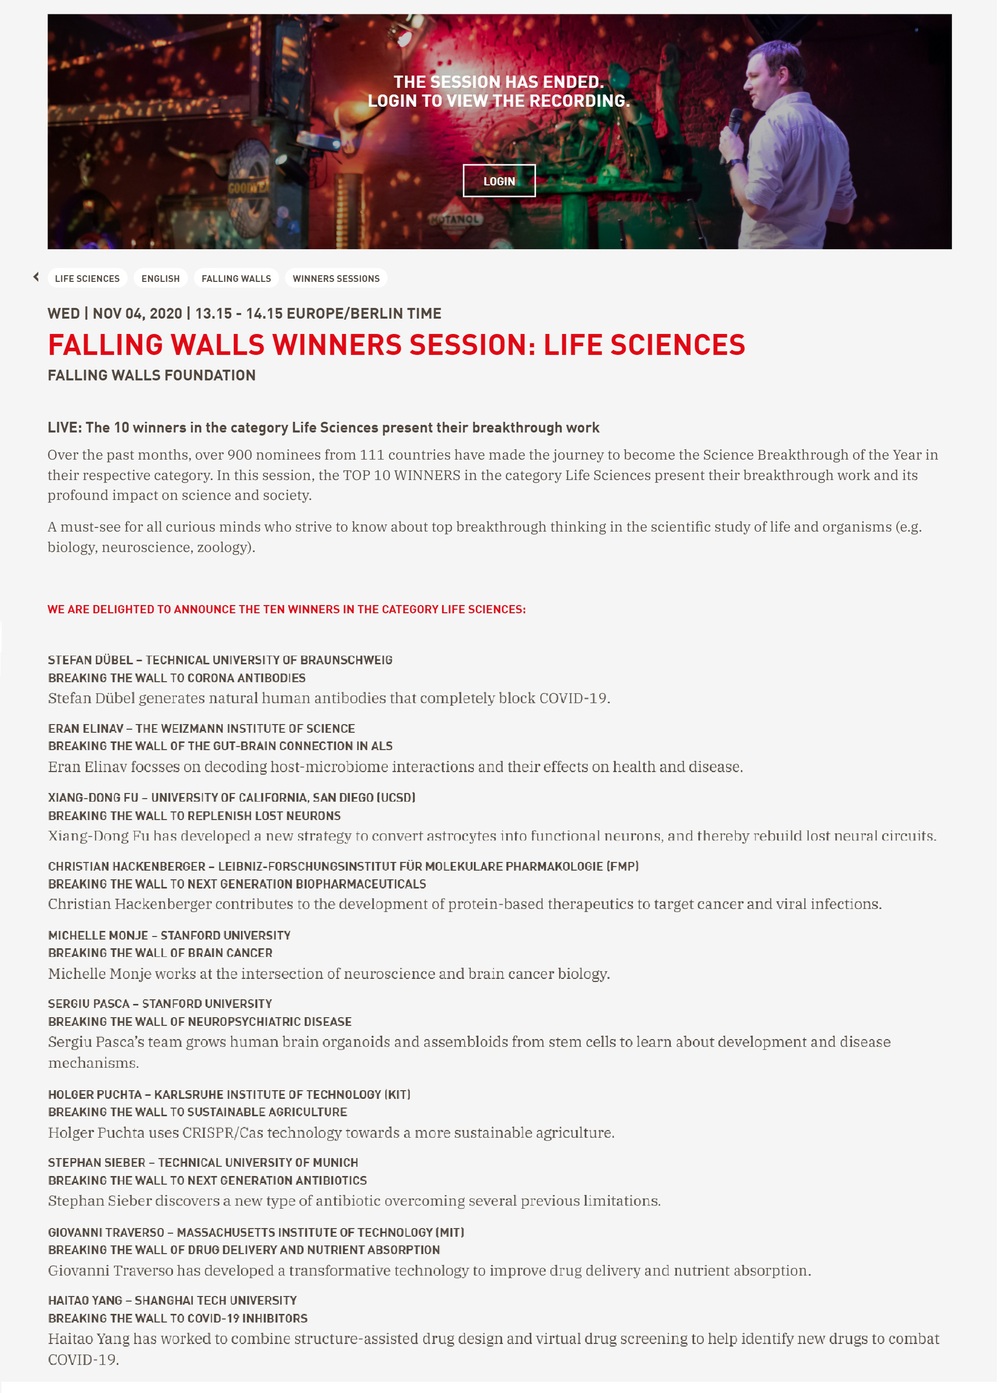 Falling Walls Honors SIAIS Professor Yang Haitao as one of the 10 Winners in Life Sciences Category